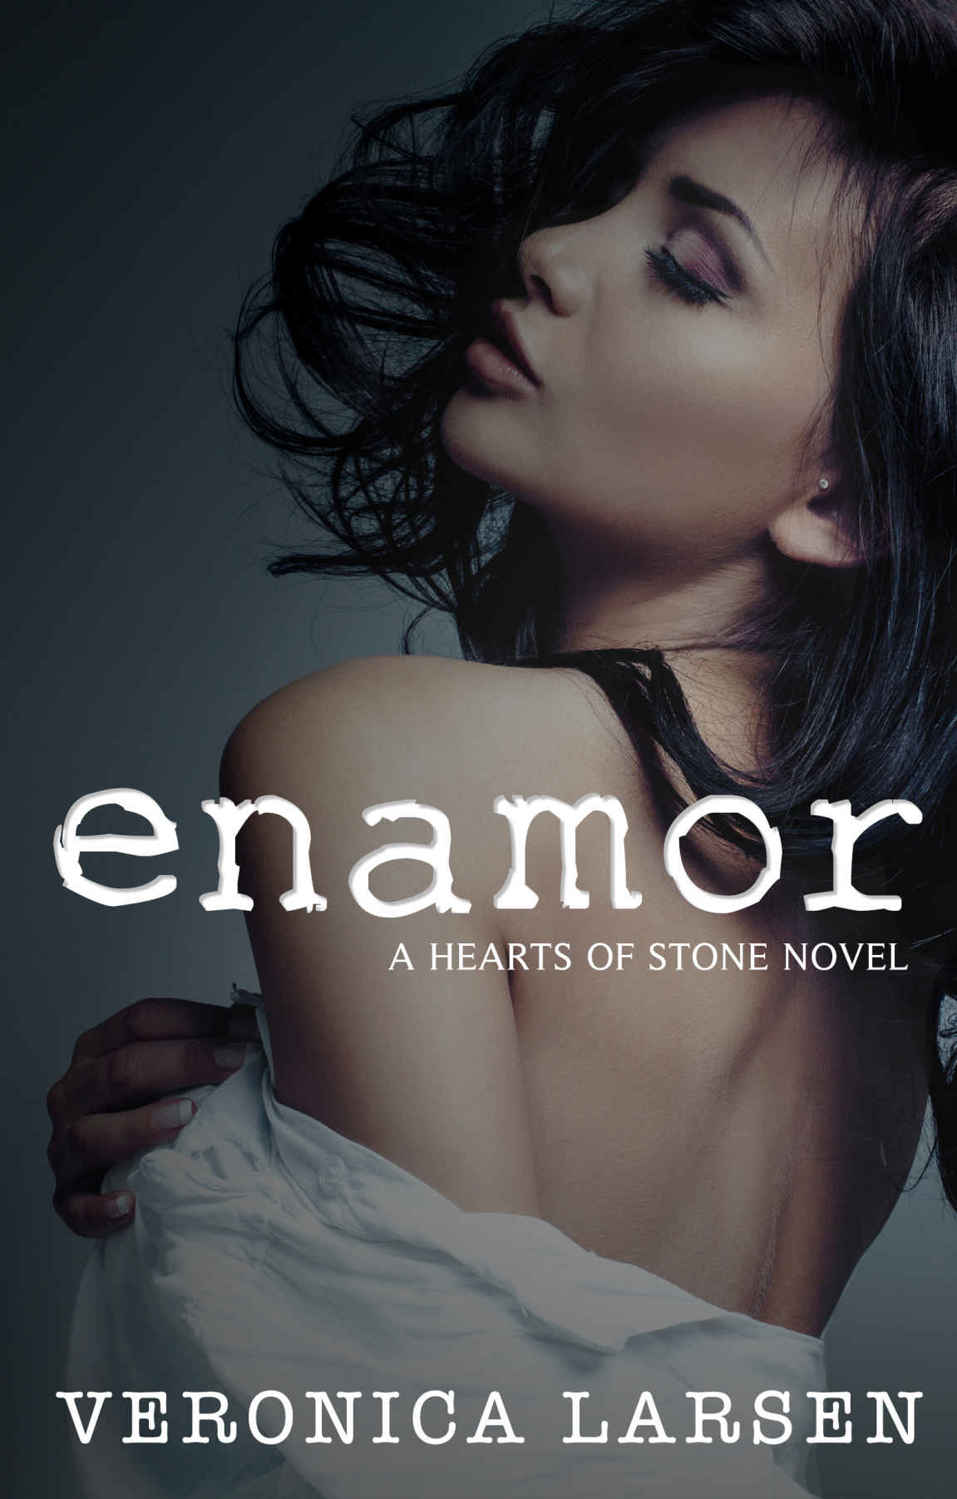 Enamor (Hearts of Stone #3) by Veronica Larsen